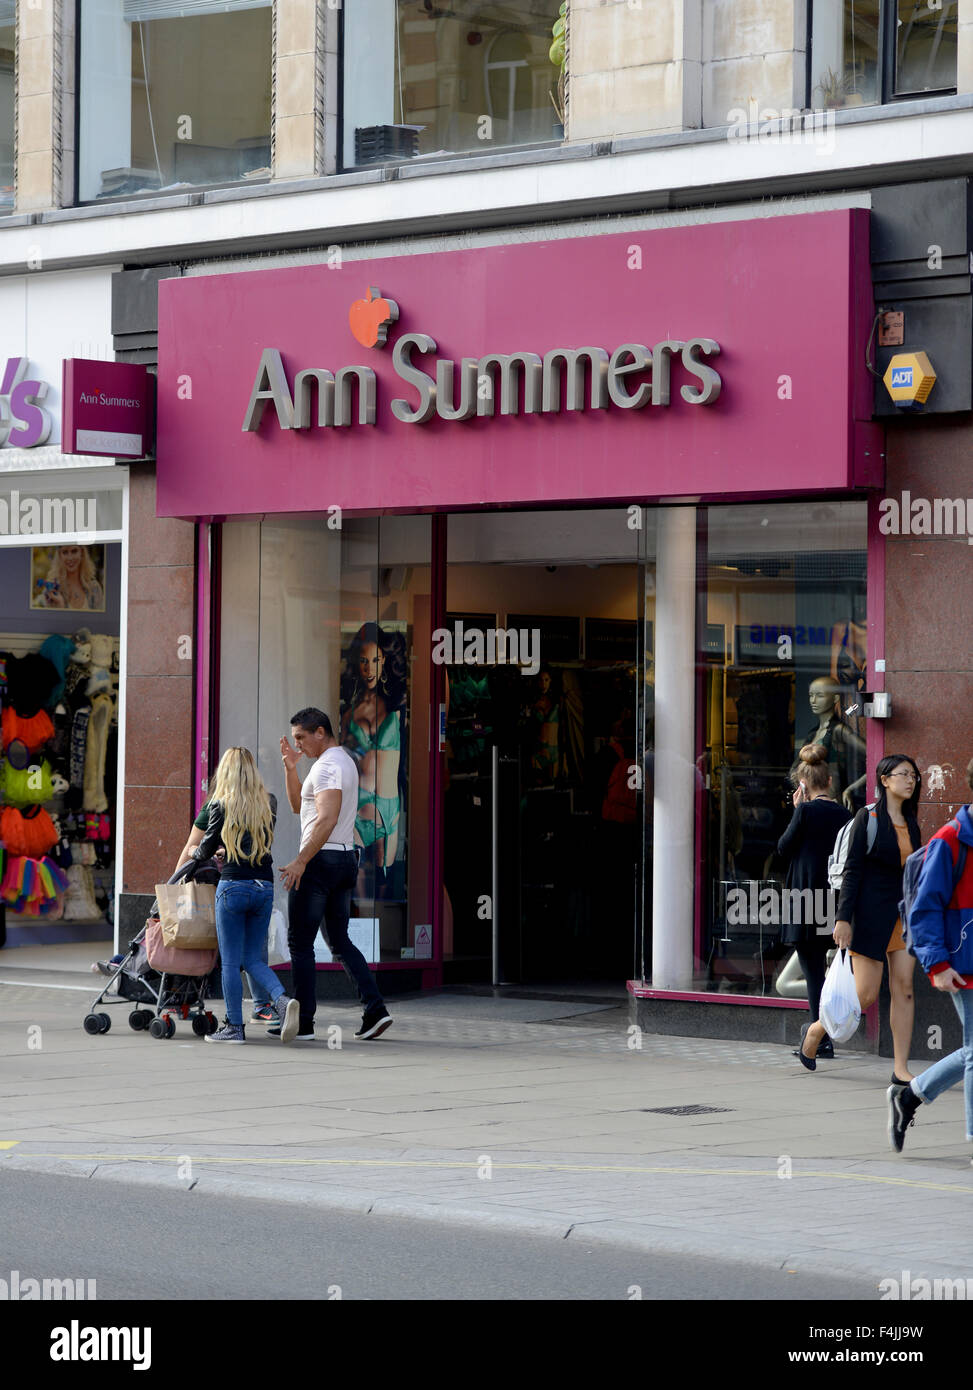 Ann Summers shop, UK Stock Photo - Alamy